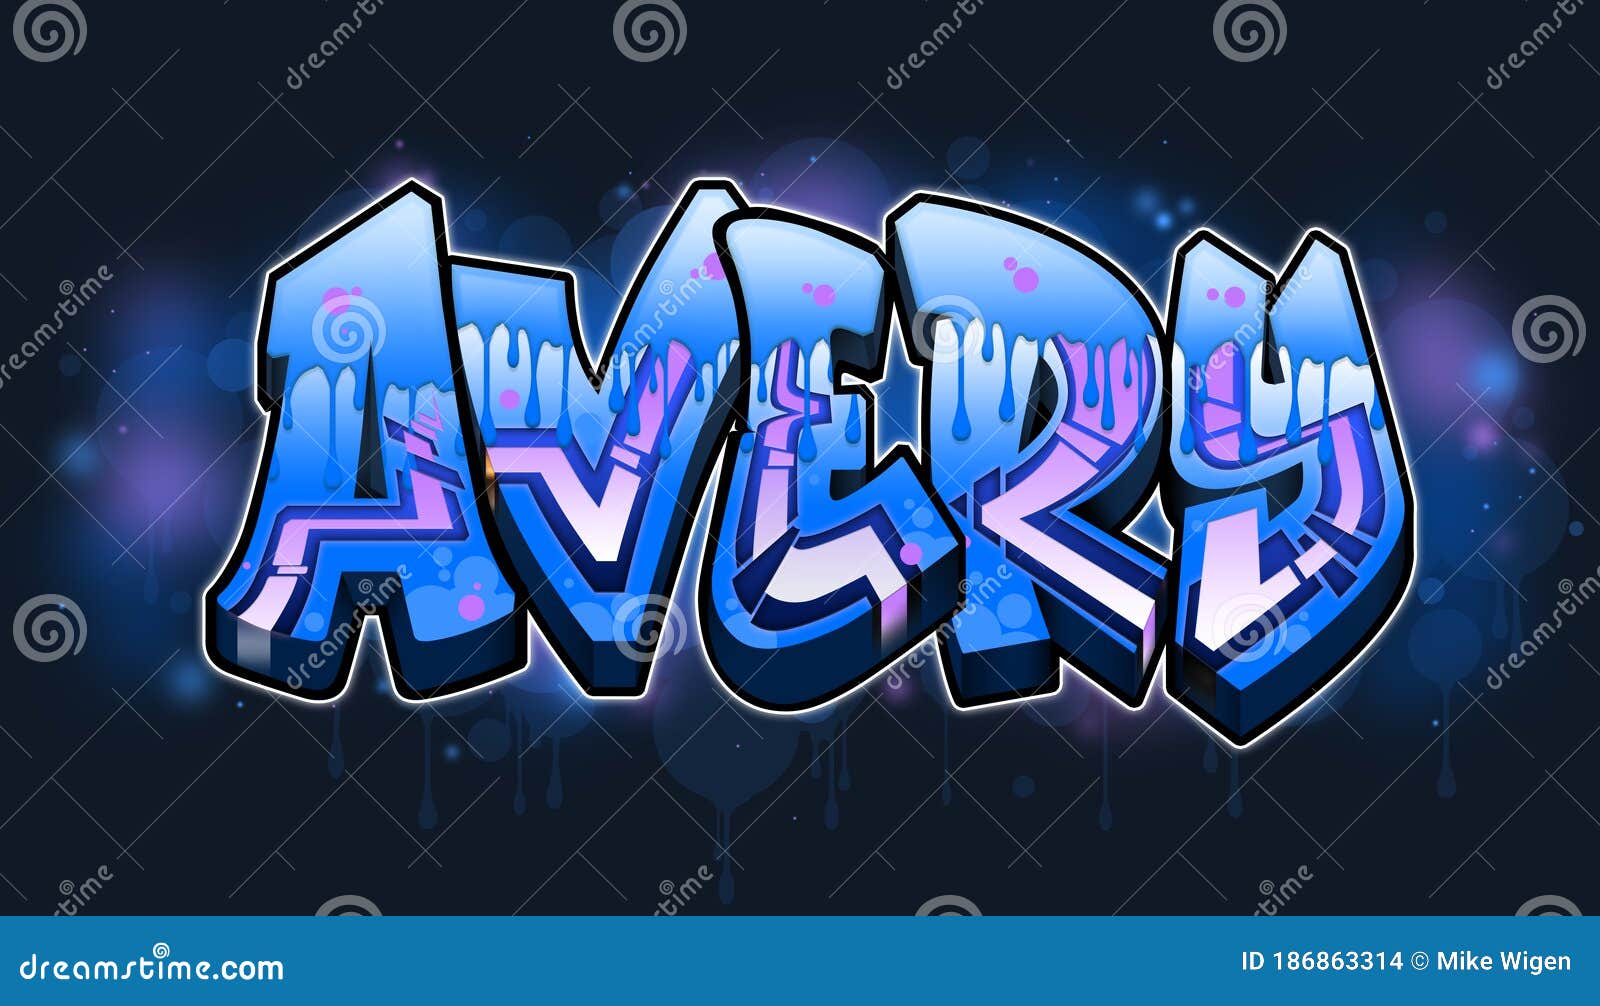 Avery Graffiti Name stock illustration. Illustration of figure